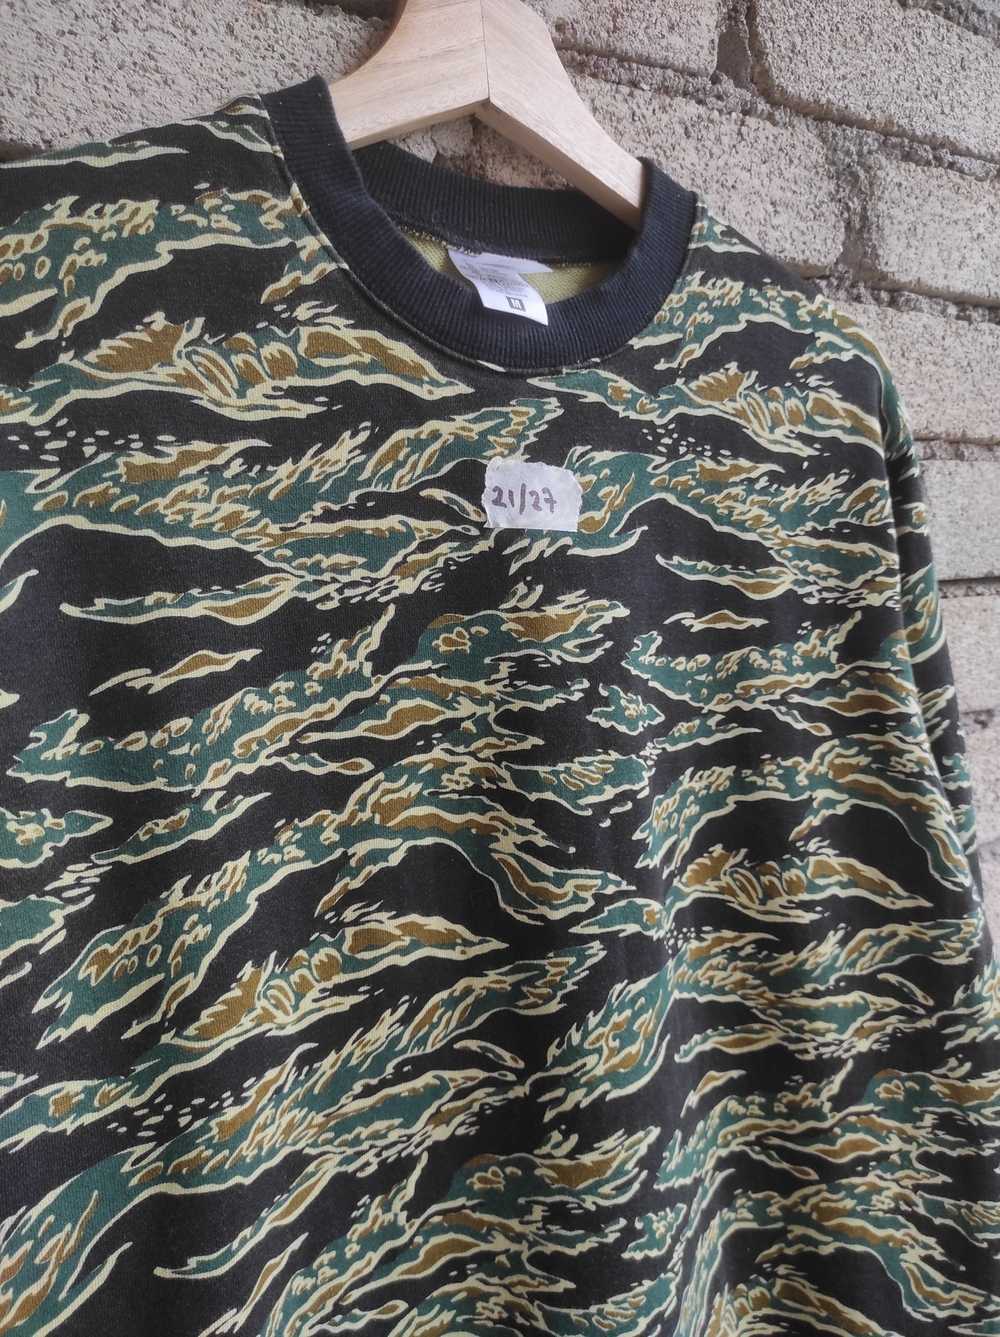 Camo × Other × Rare lifemax camo tiger sweatshirt - image 4